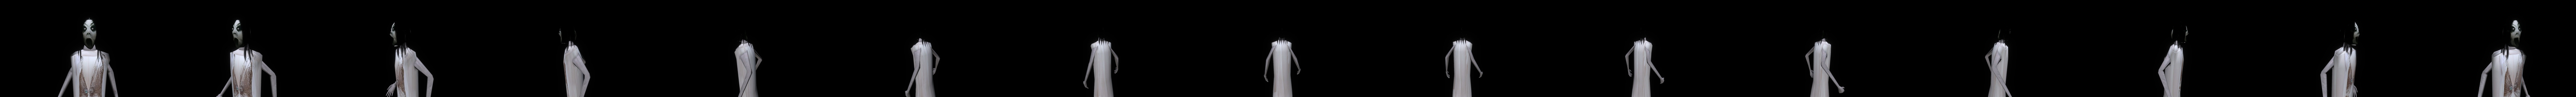 Slendrina (Granny 3) - Download Free 3D model by DVUnit (@DVUnit